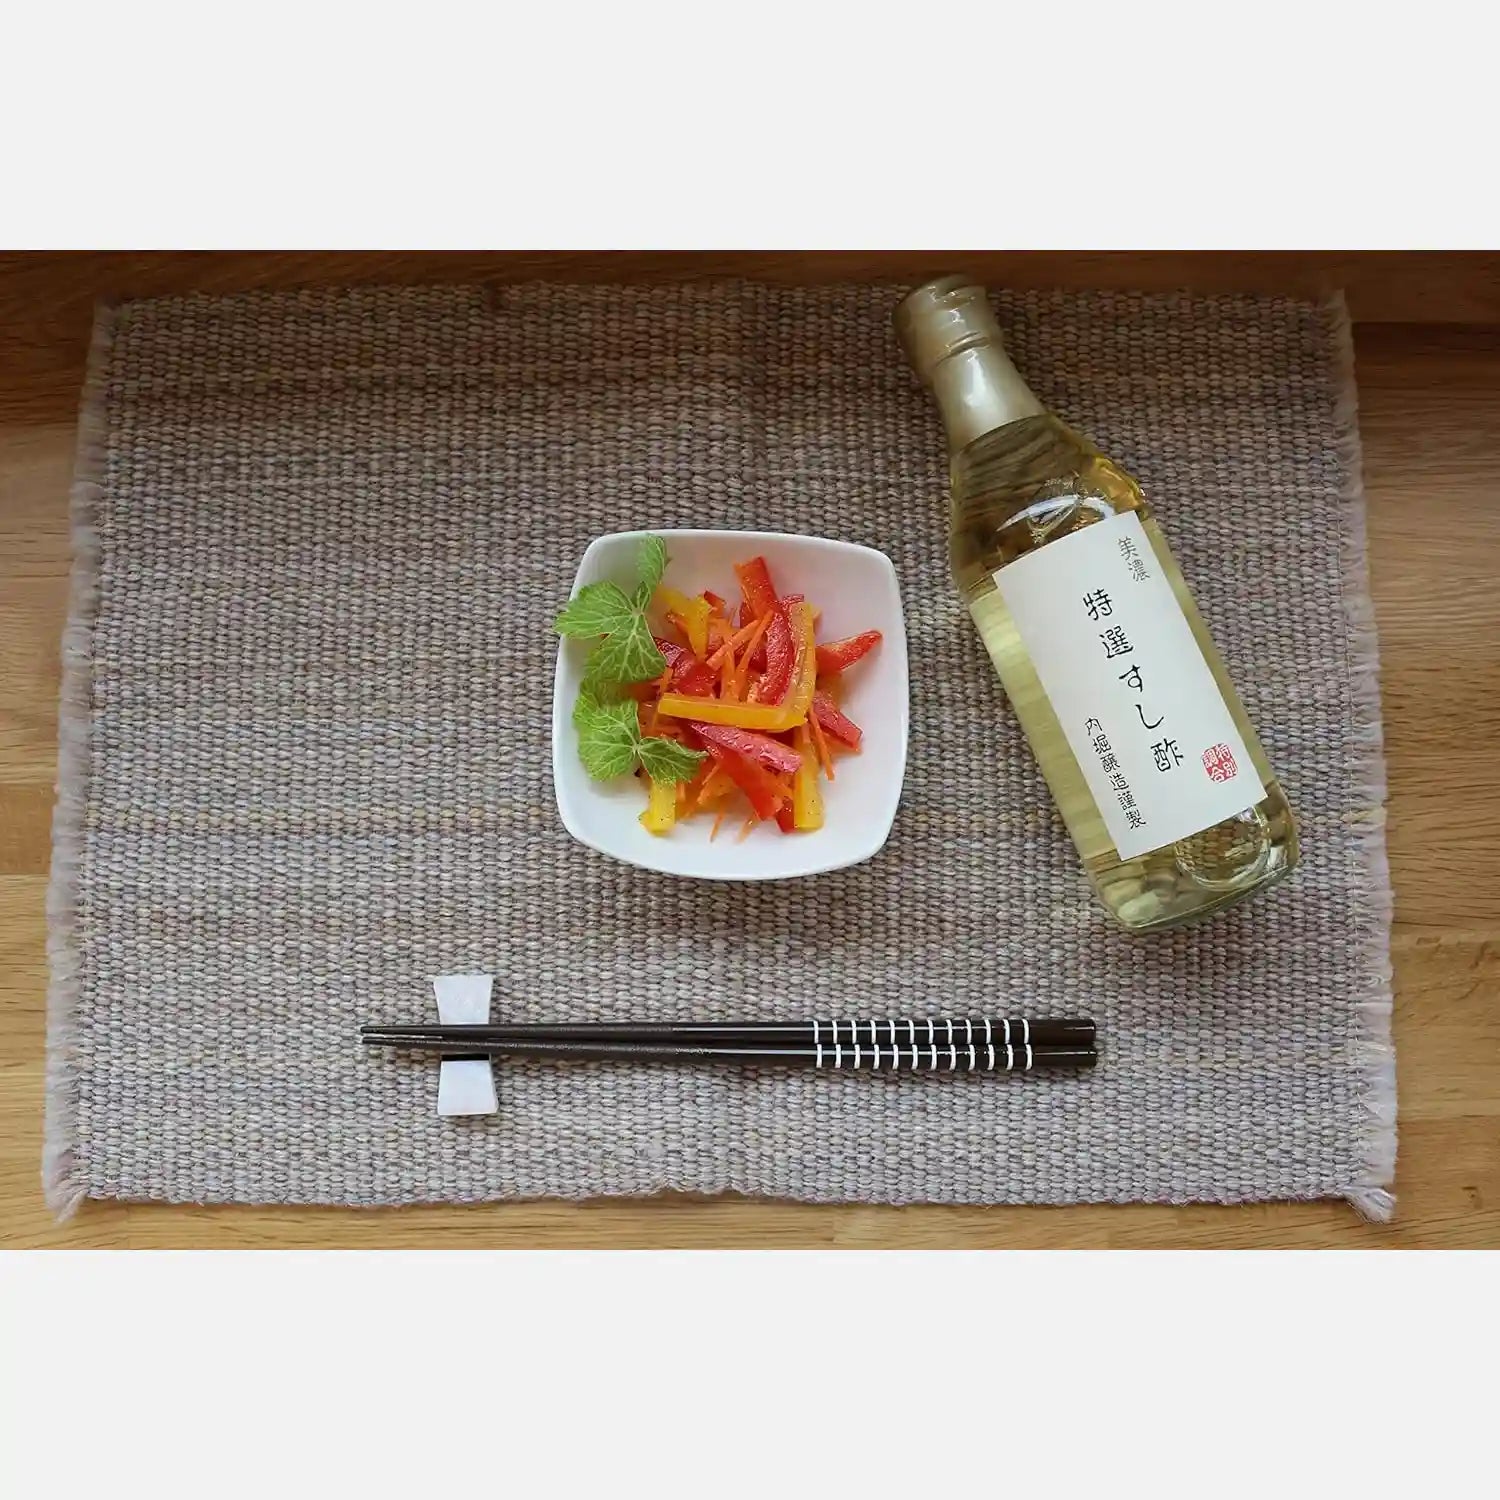 Uchibori Special Vinegar For Sushi 360ml - Buy Me Japan